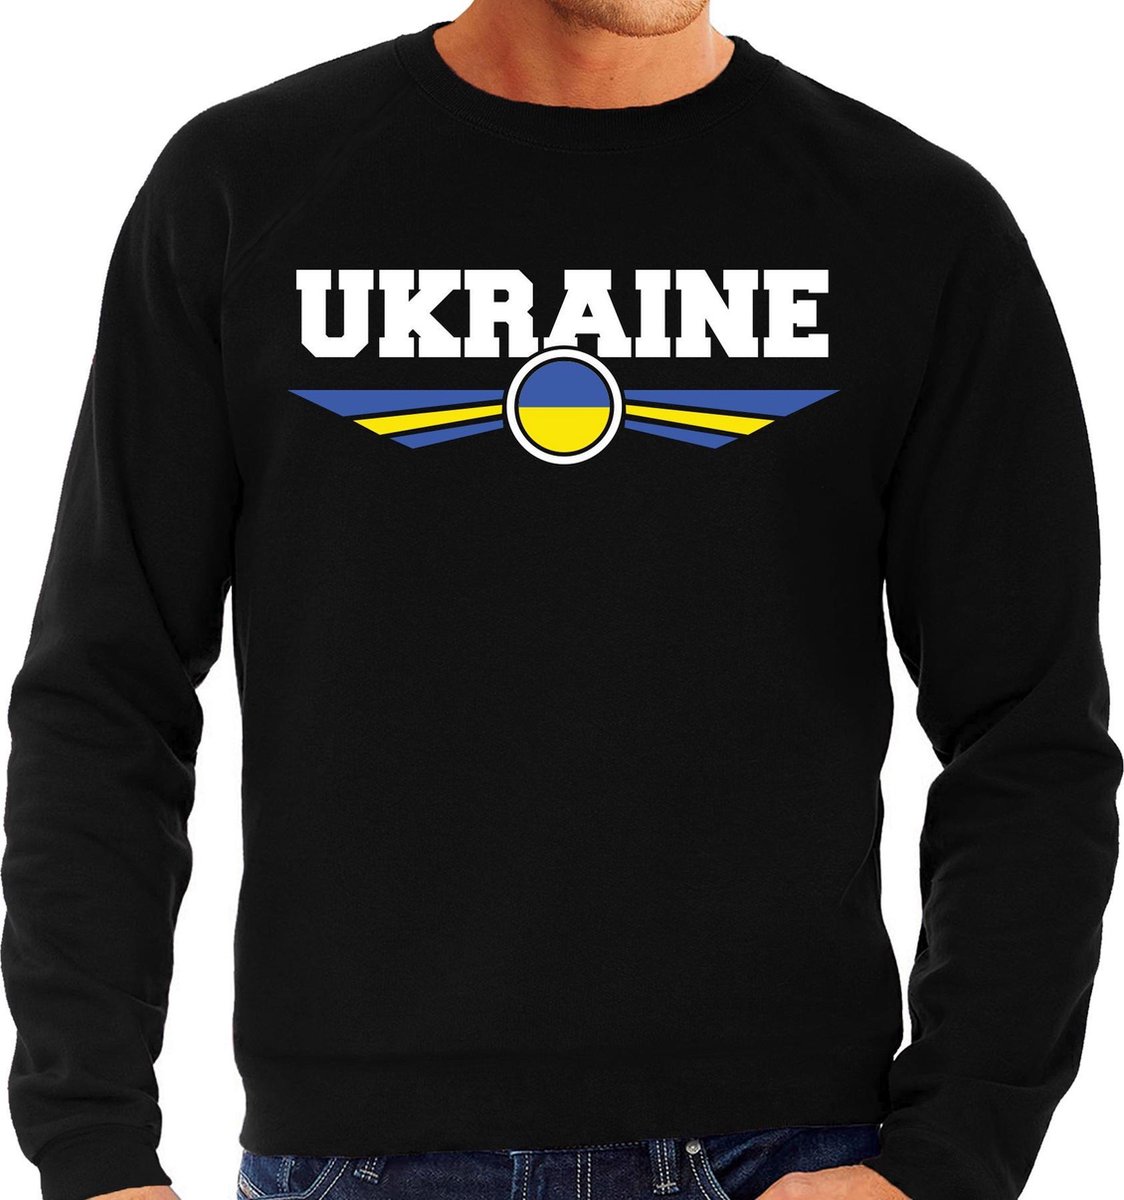 Oekraine / Ukraine landen sweater / trui zwart heren XL